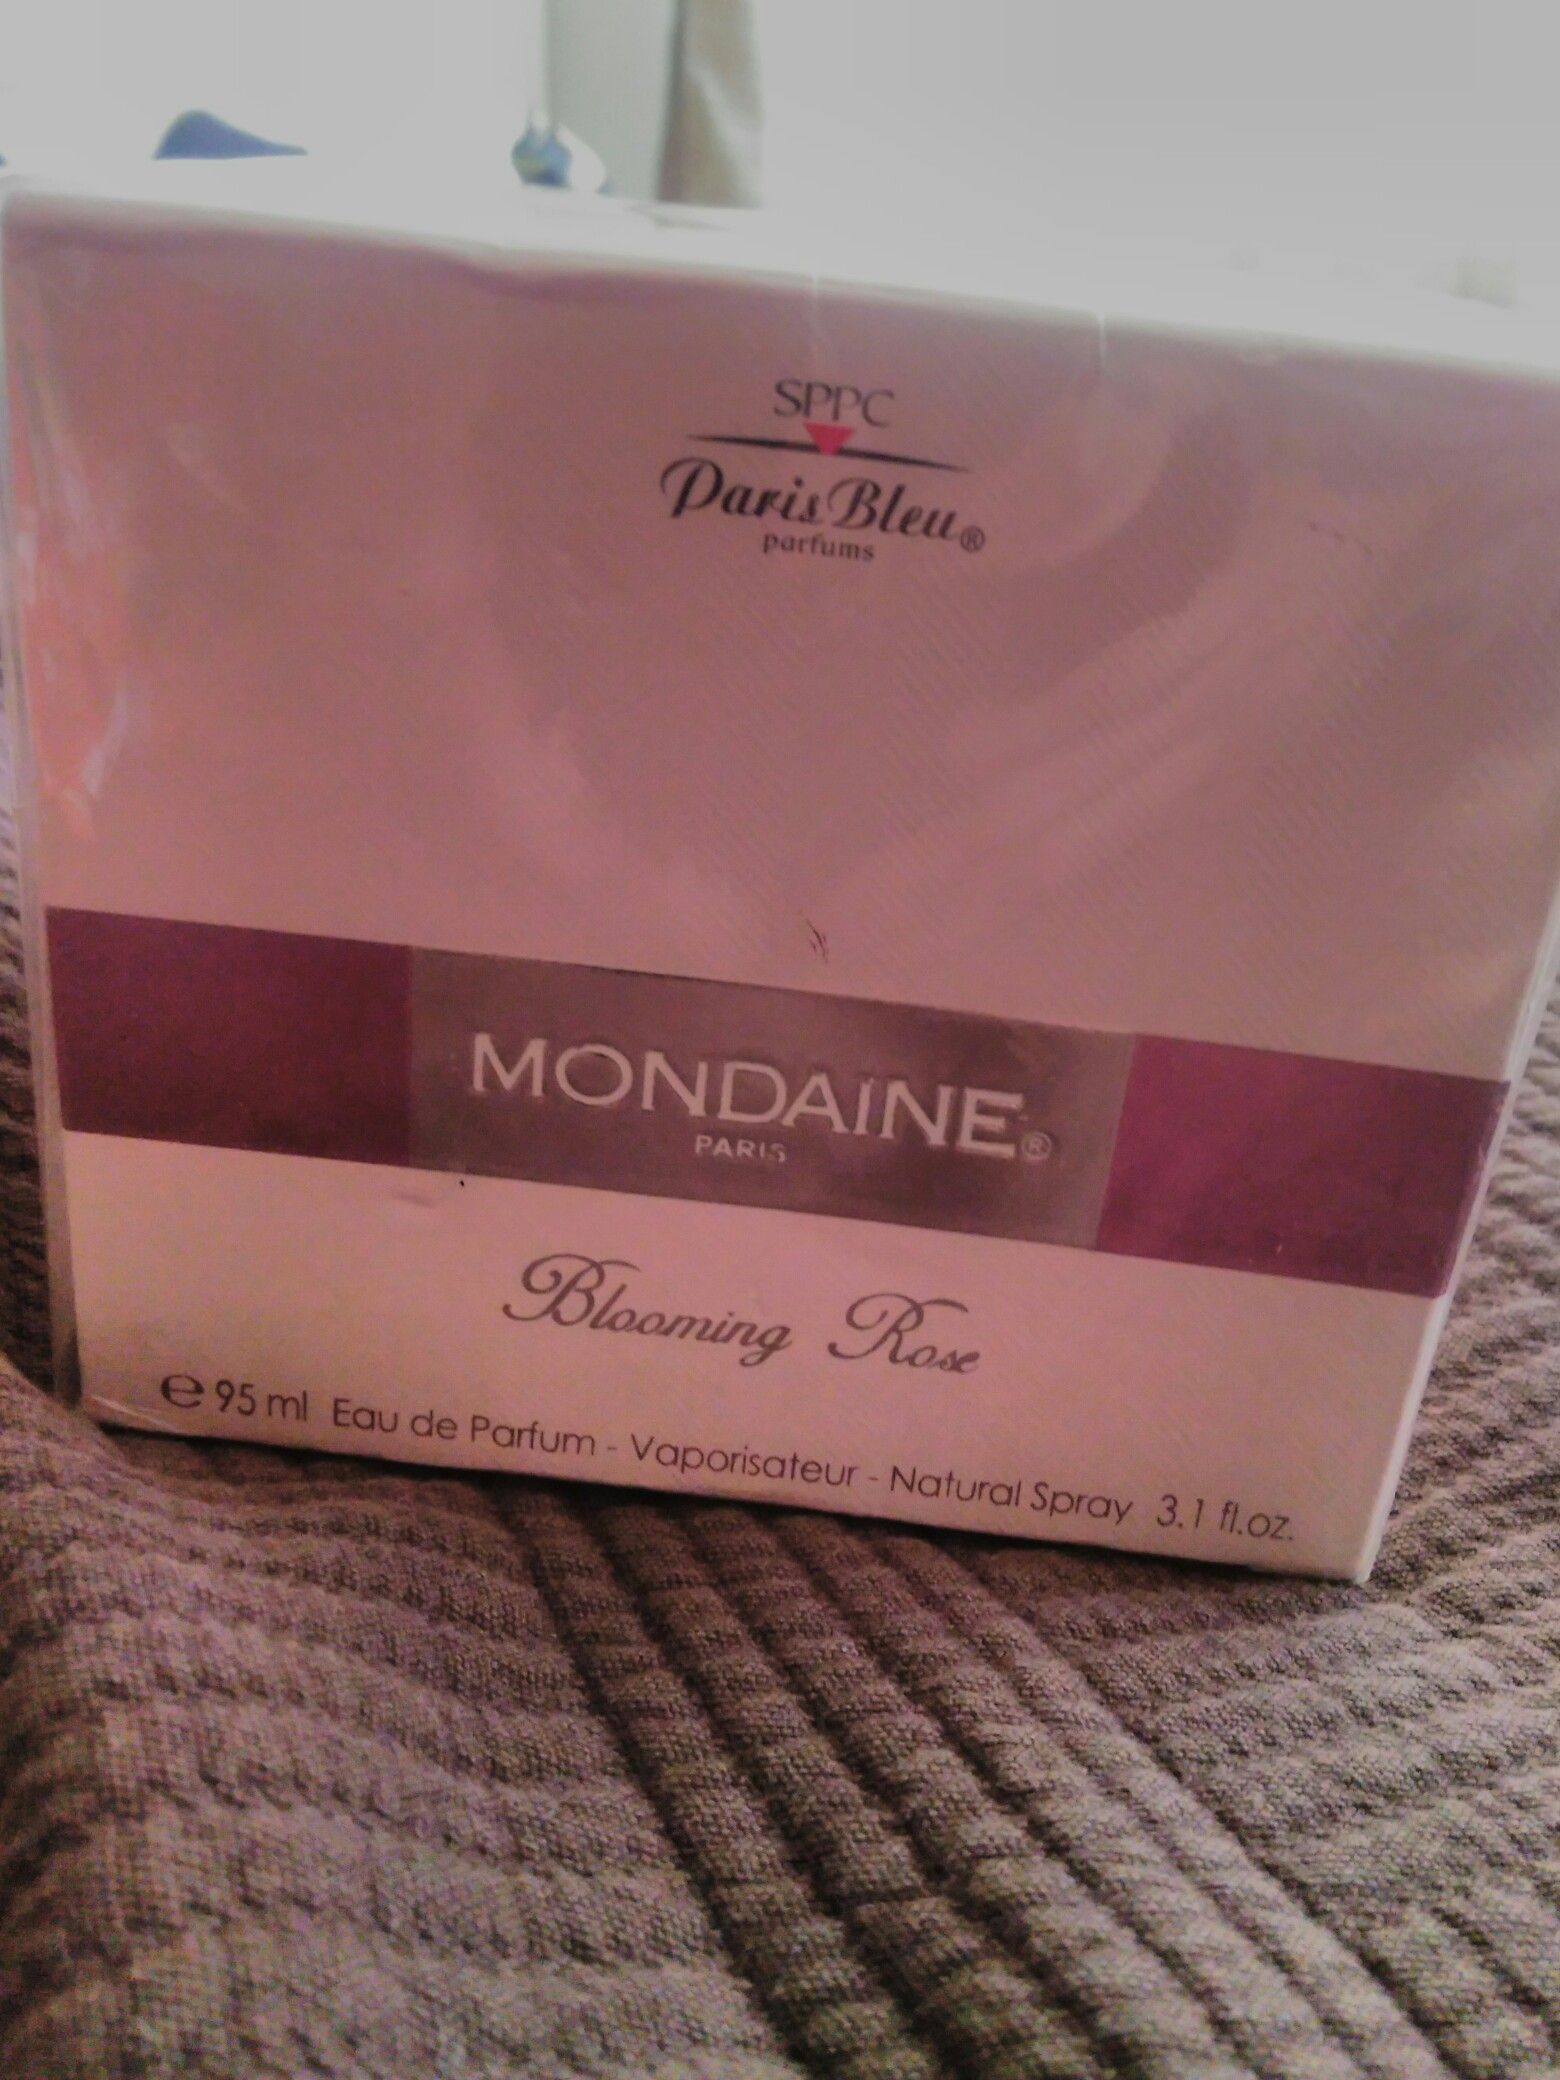 2 ) Mondaine Paris Bleu Eau de Parfum Spray 3.1 oz